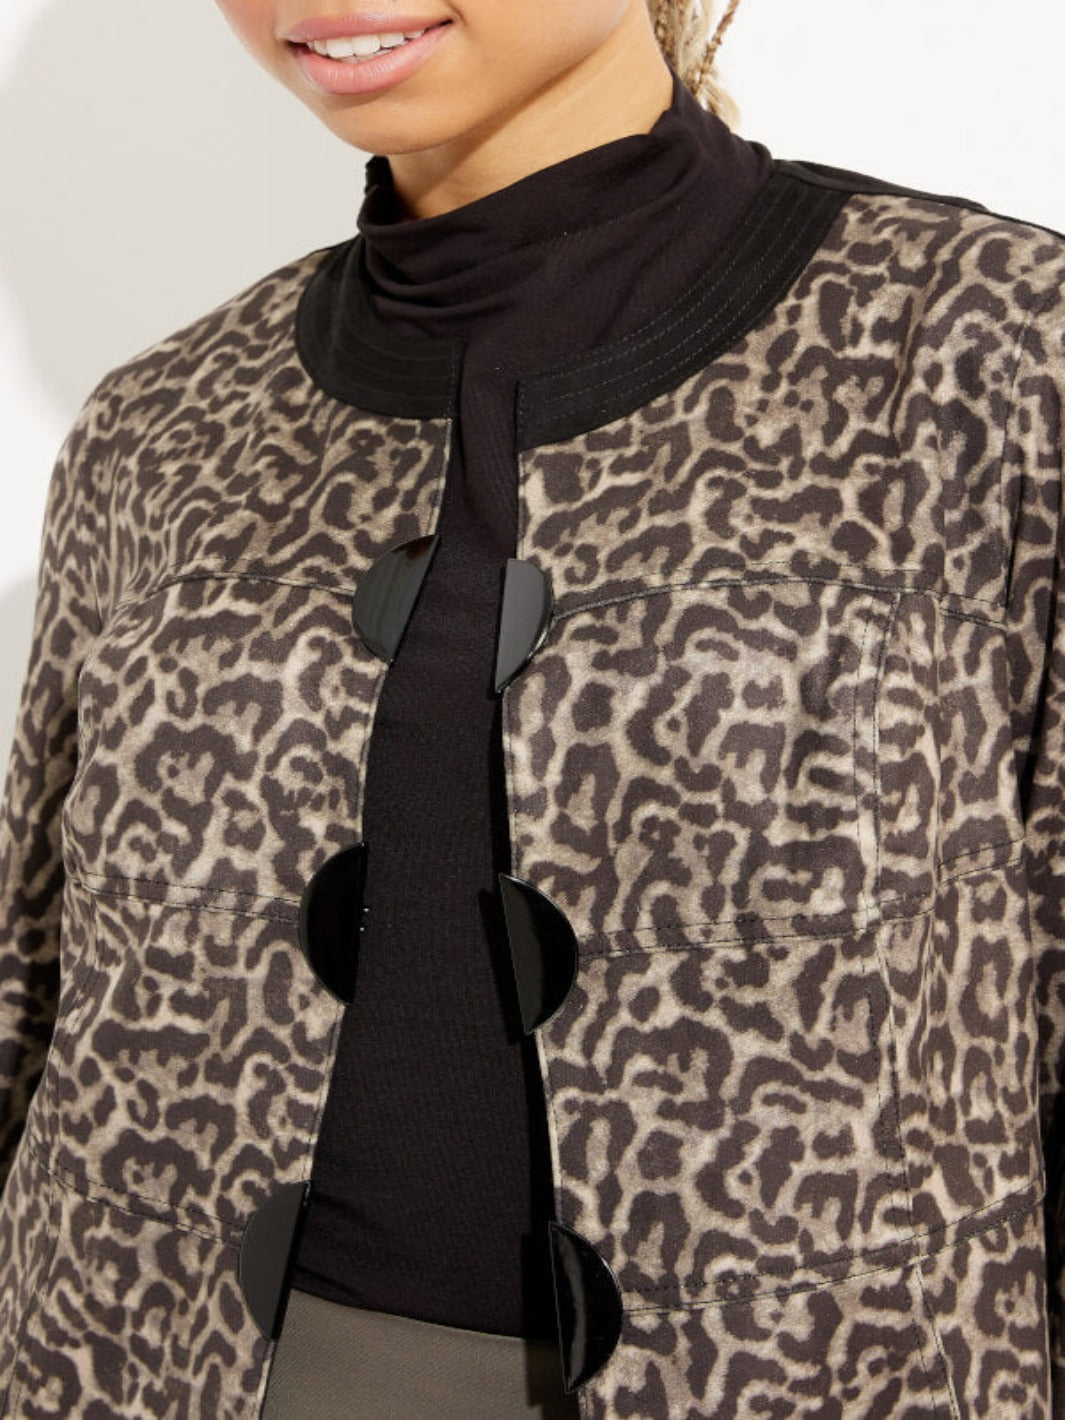 Joseph Ribkoff - Leopard Print Rounded Collar Jacket In Black/Beige 233953-Nicola Ross